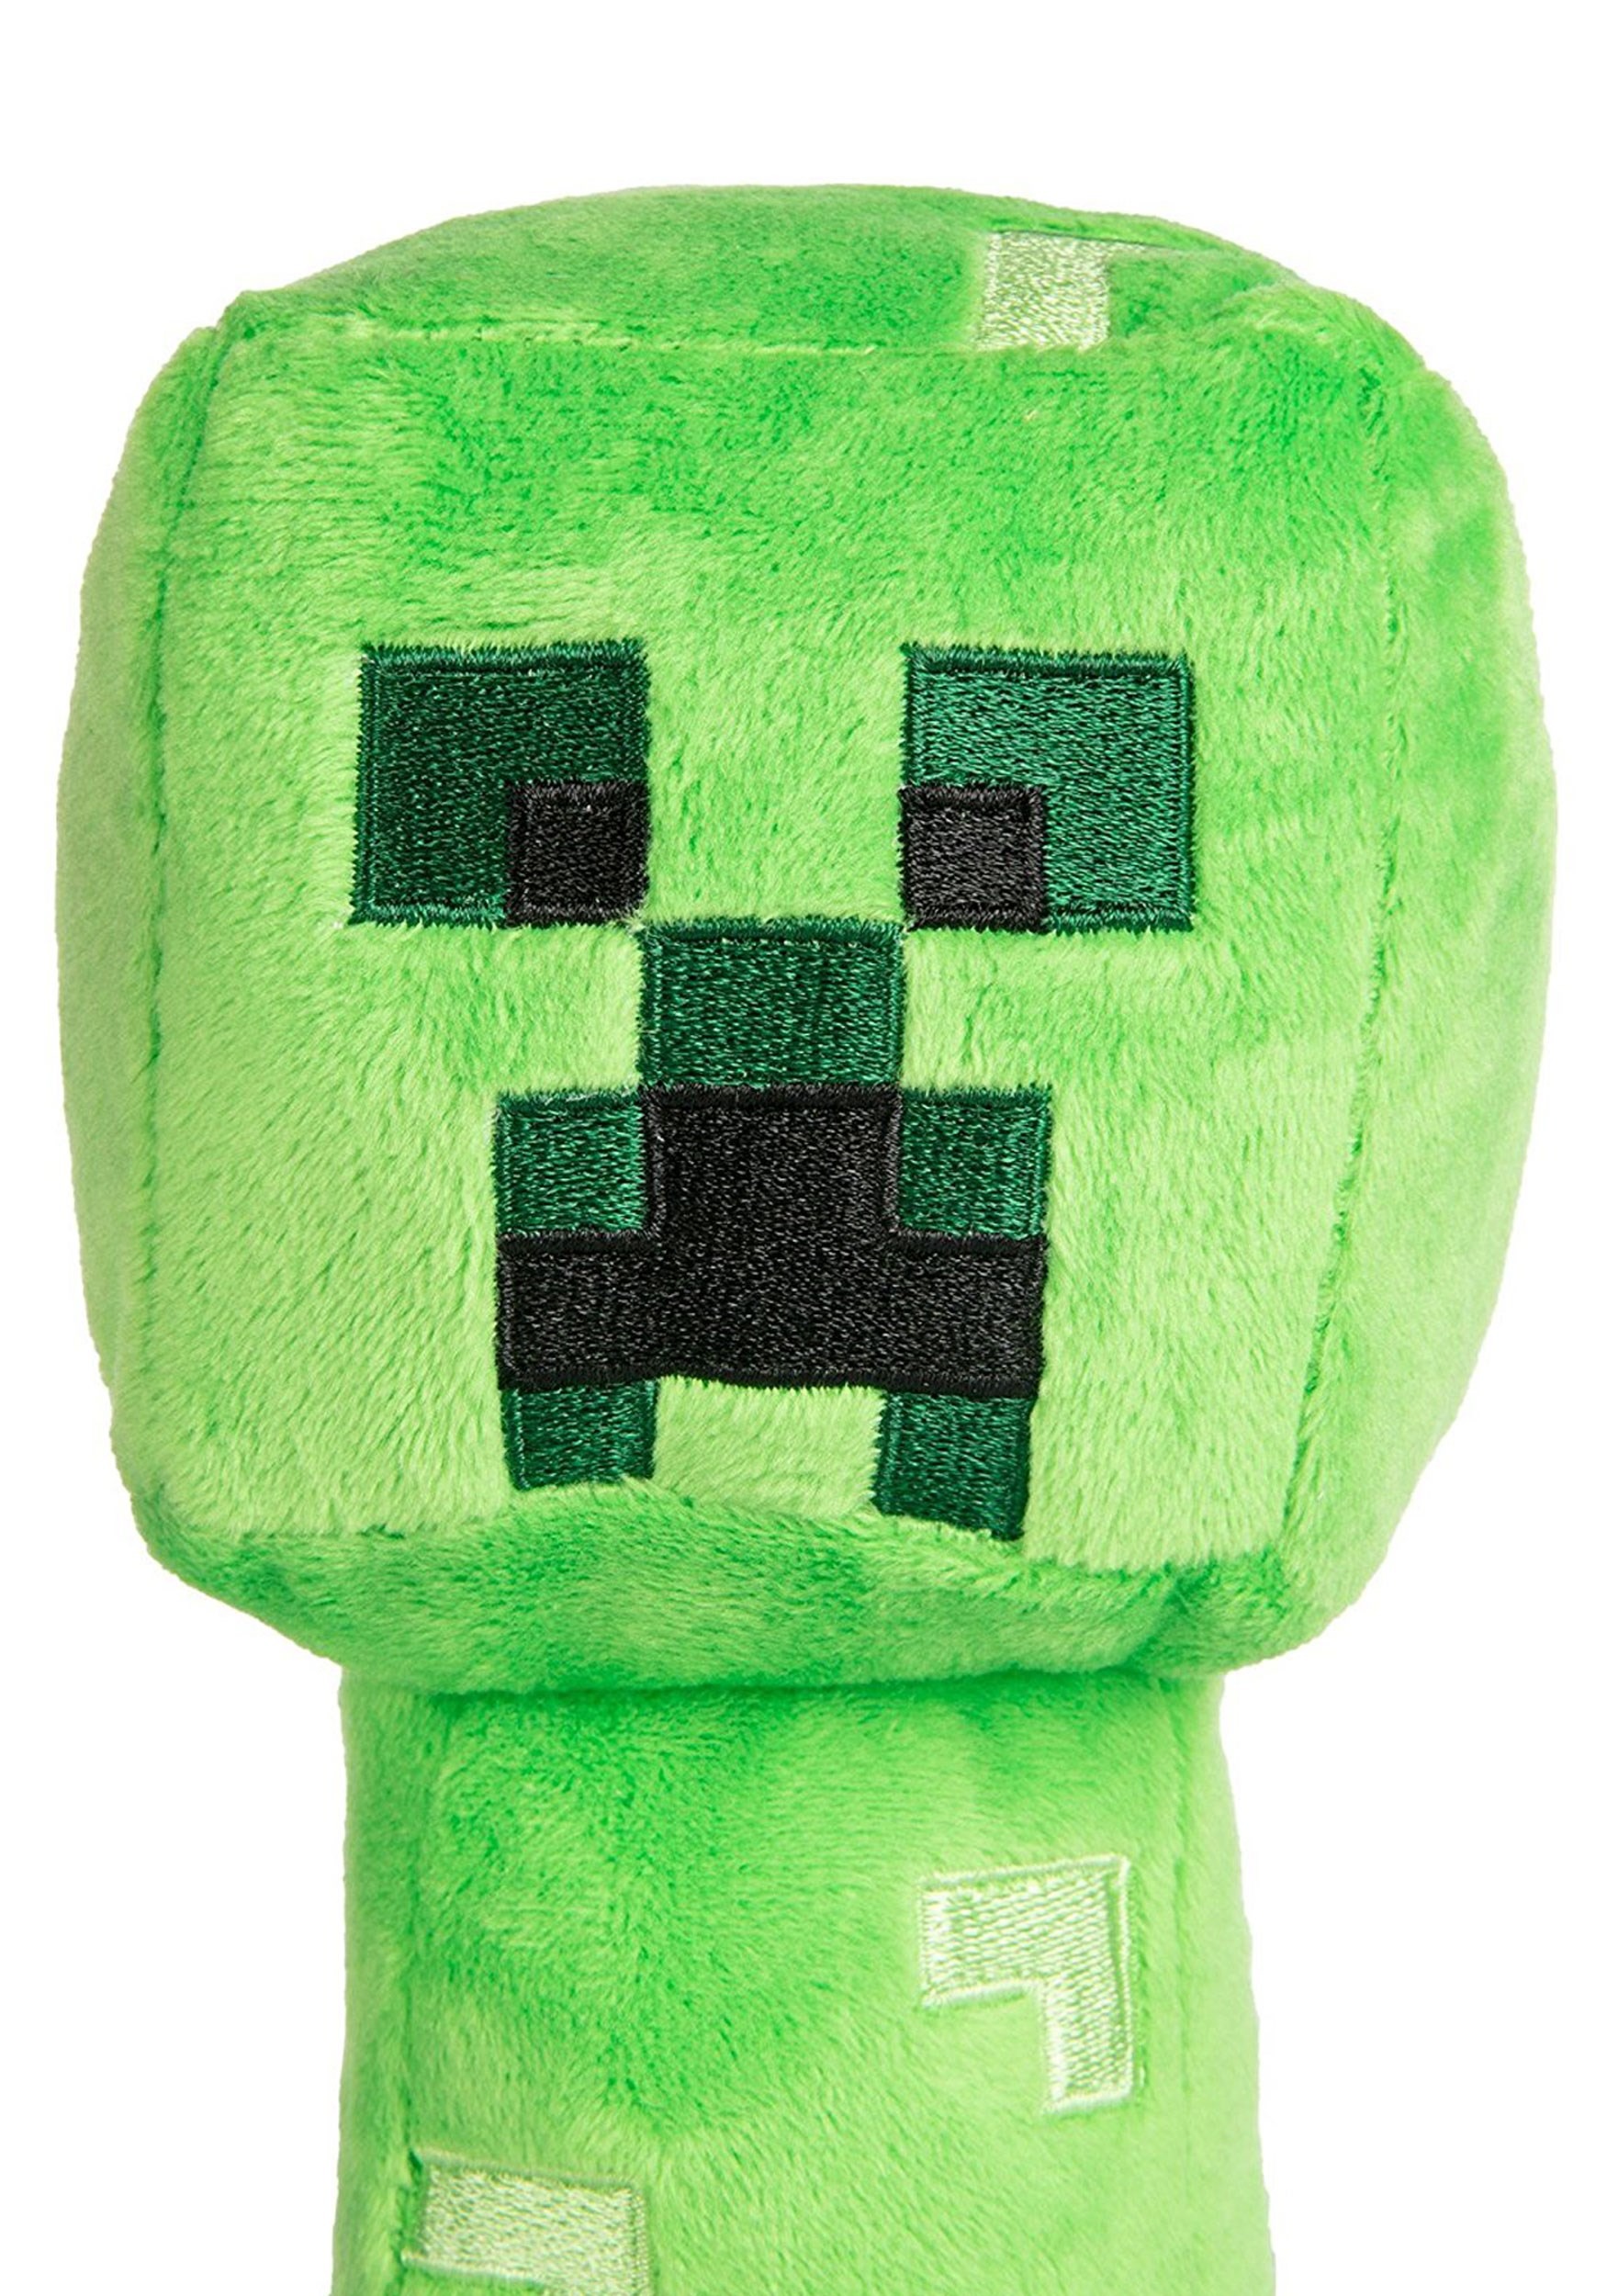 Minecraft Happy Explorer Creeper 7 Stuffed Figure